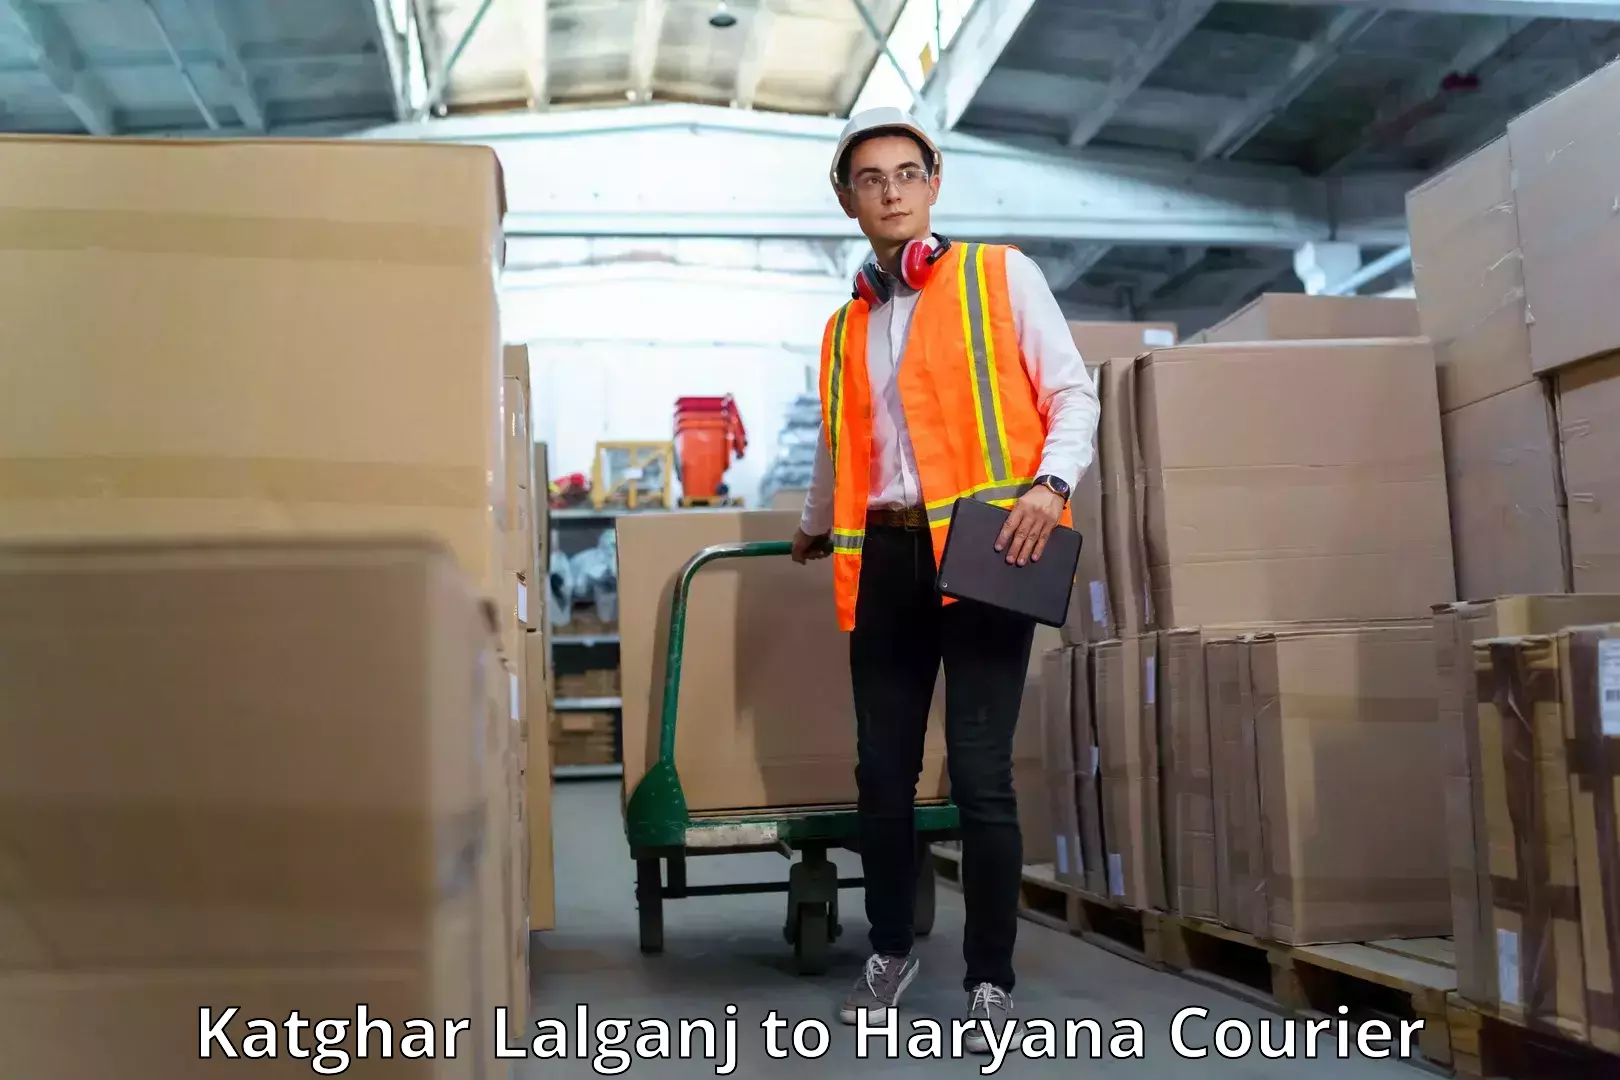 Professional courier handling Katghar Lalganj to Nuh